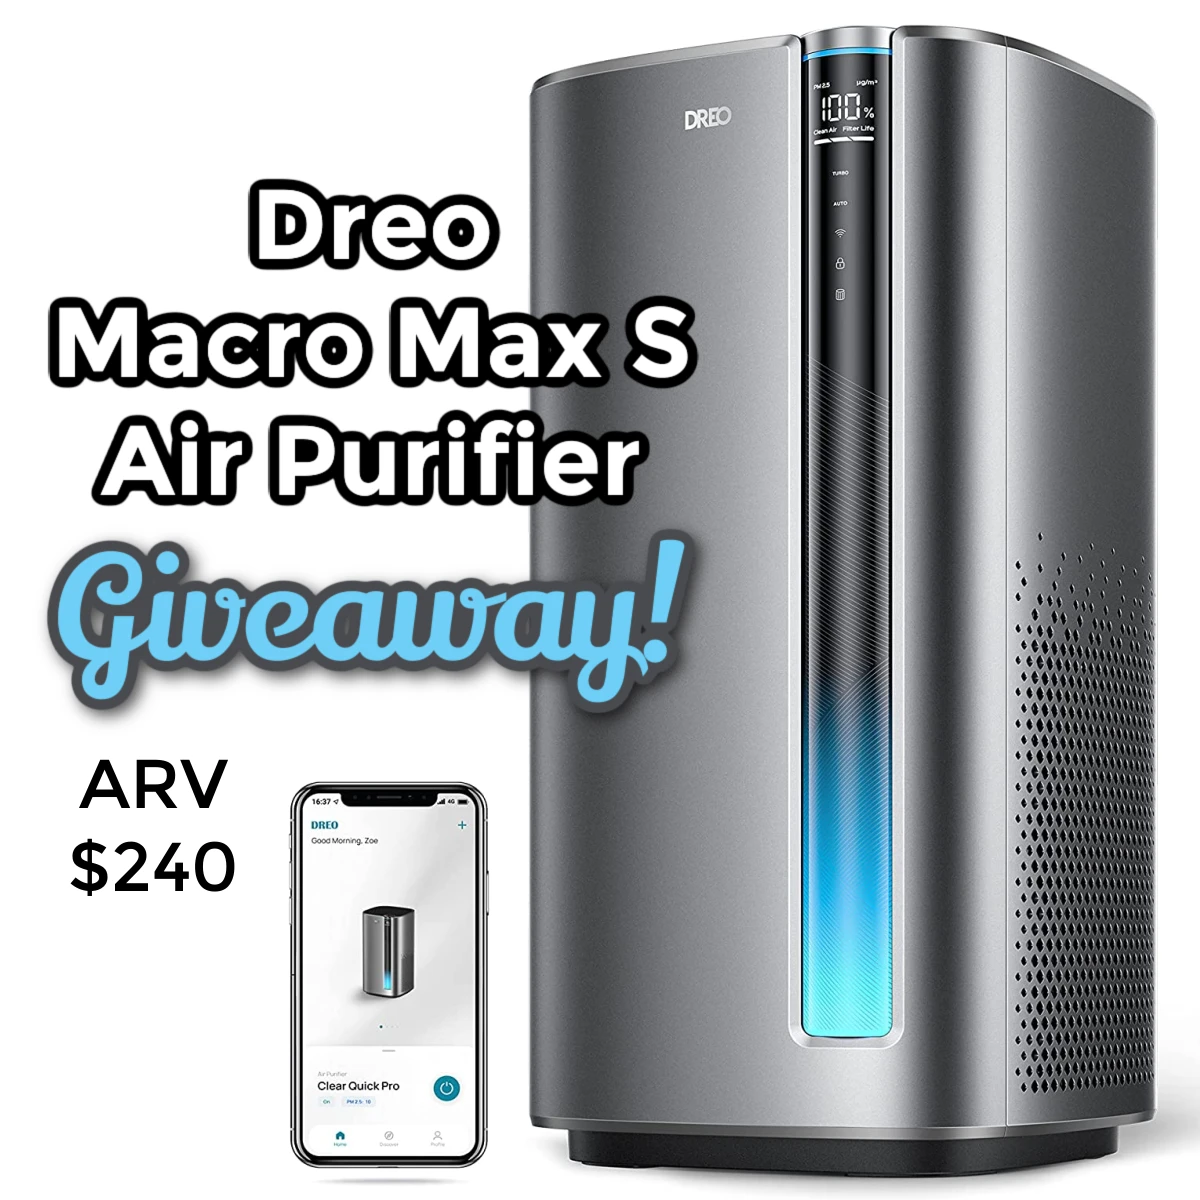 Dreo Macro Max S Air Purifier giveaway